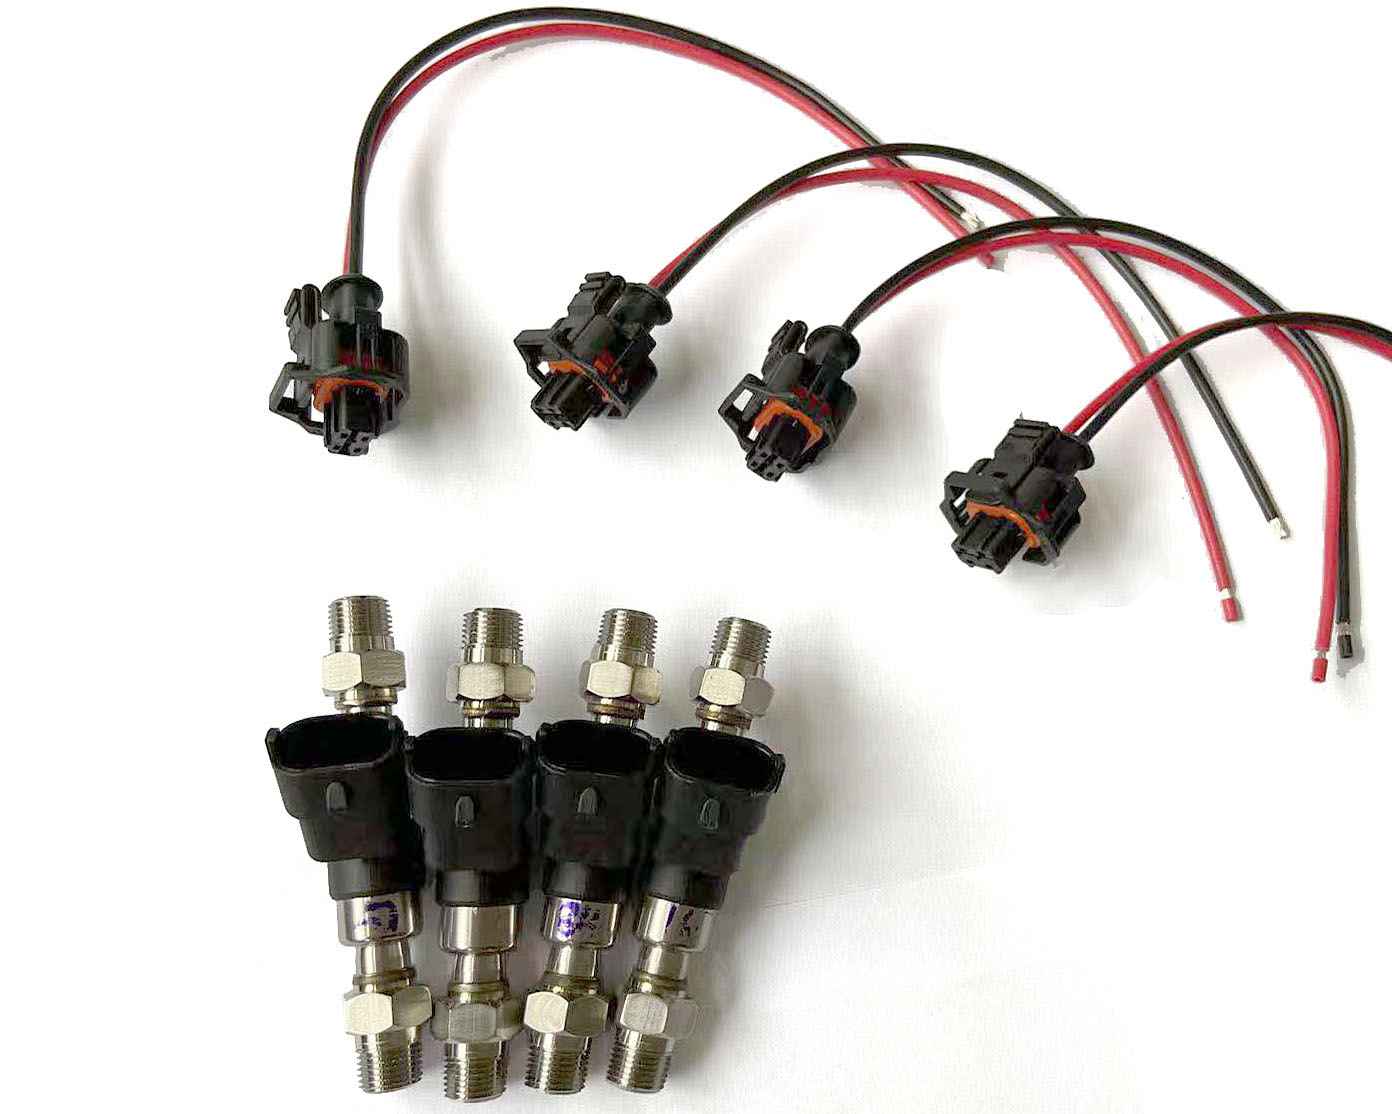 1/8 NPT thread RACE valves w/wiring harness